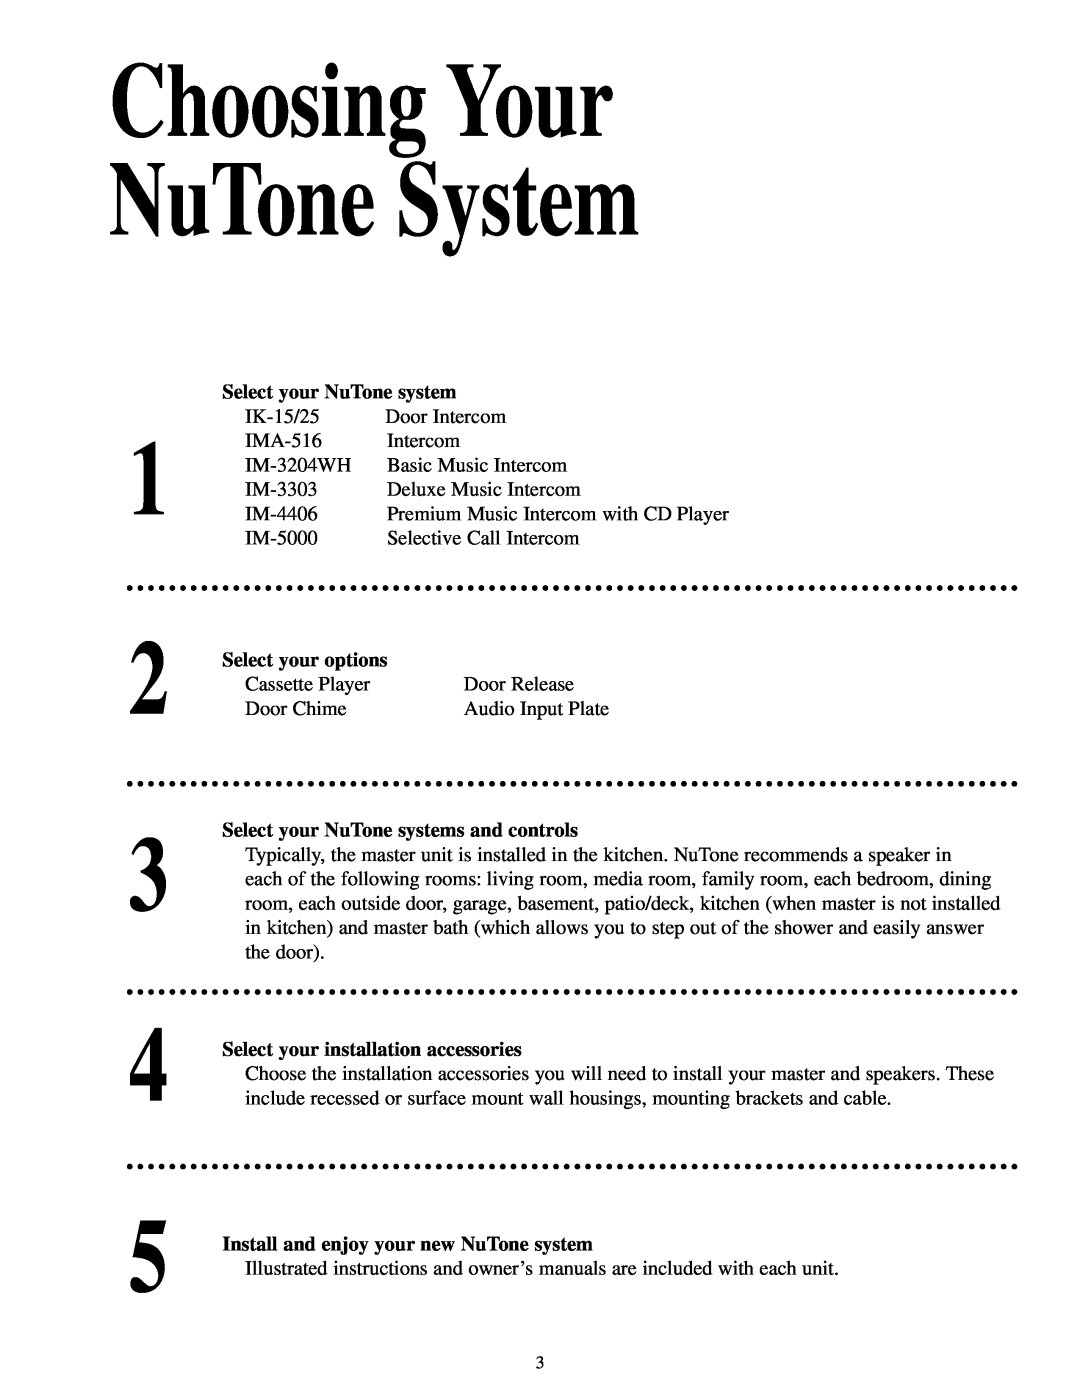 NuTone IMA-516, IM-4406, IM-5000, IM-3303, IK-15 Choosing Your NuTone System, Select your NuTone system, Select your options 